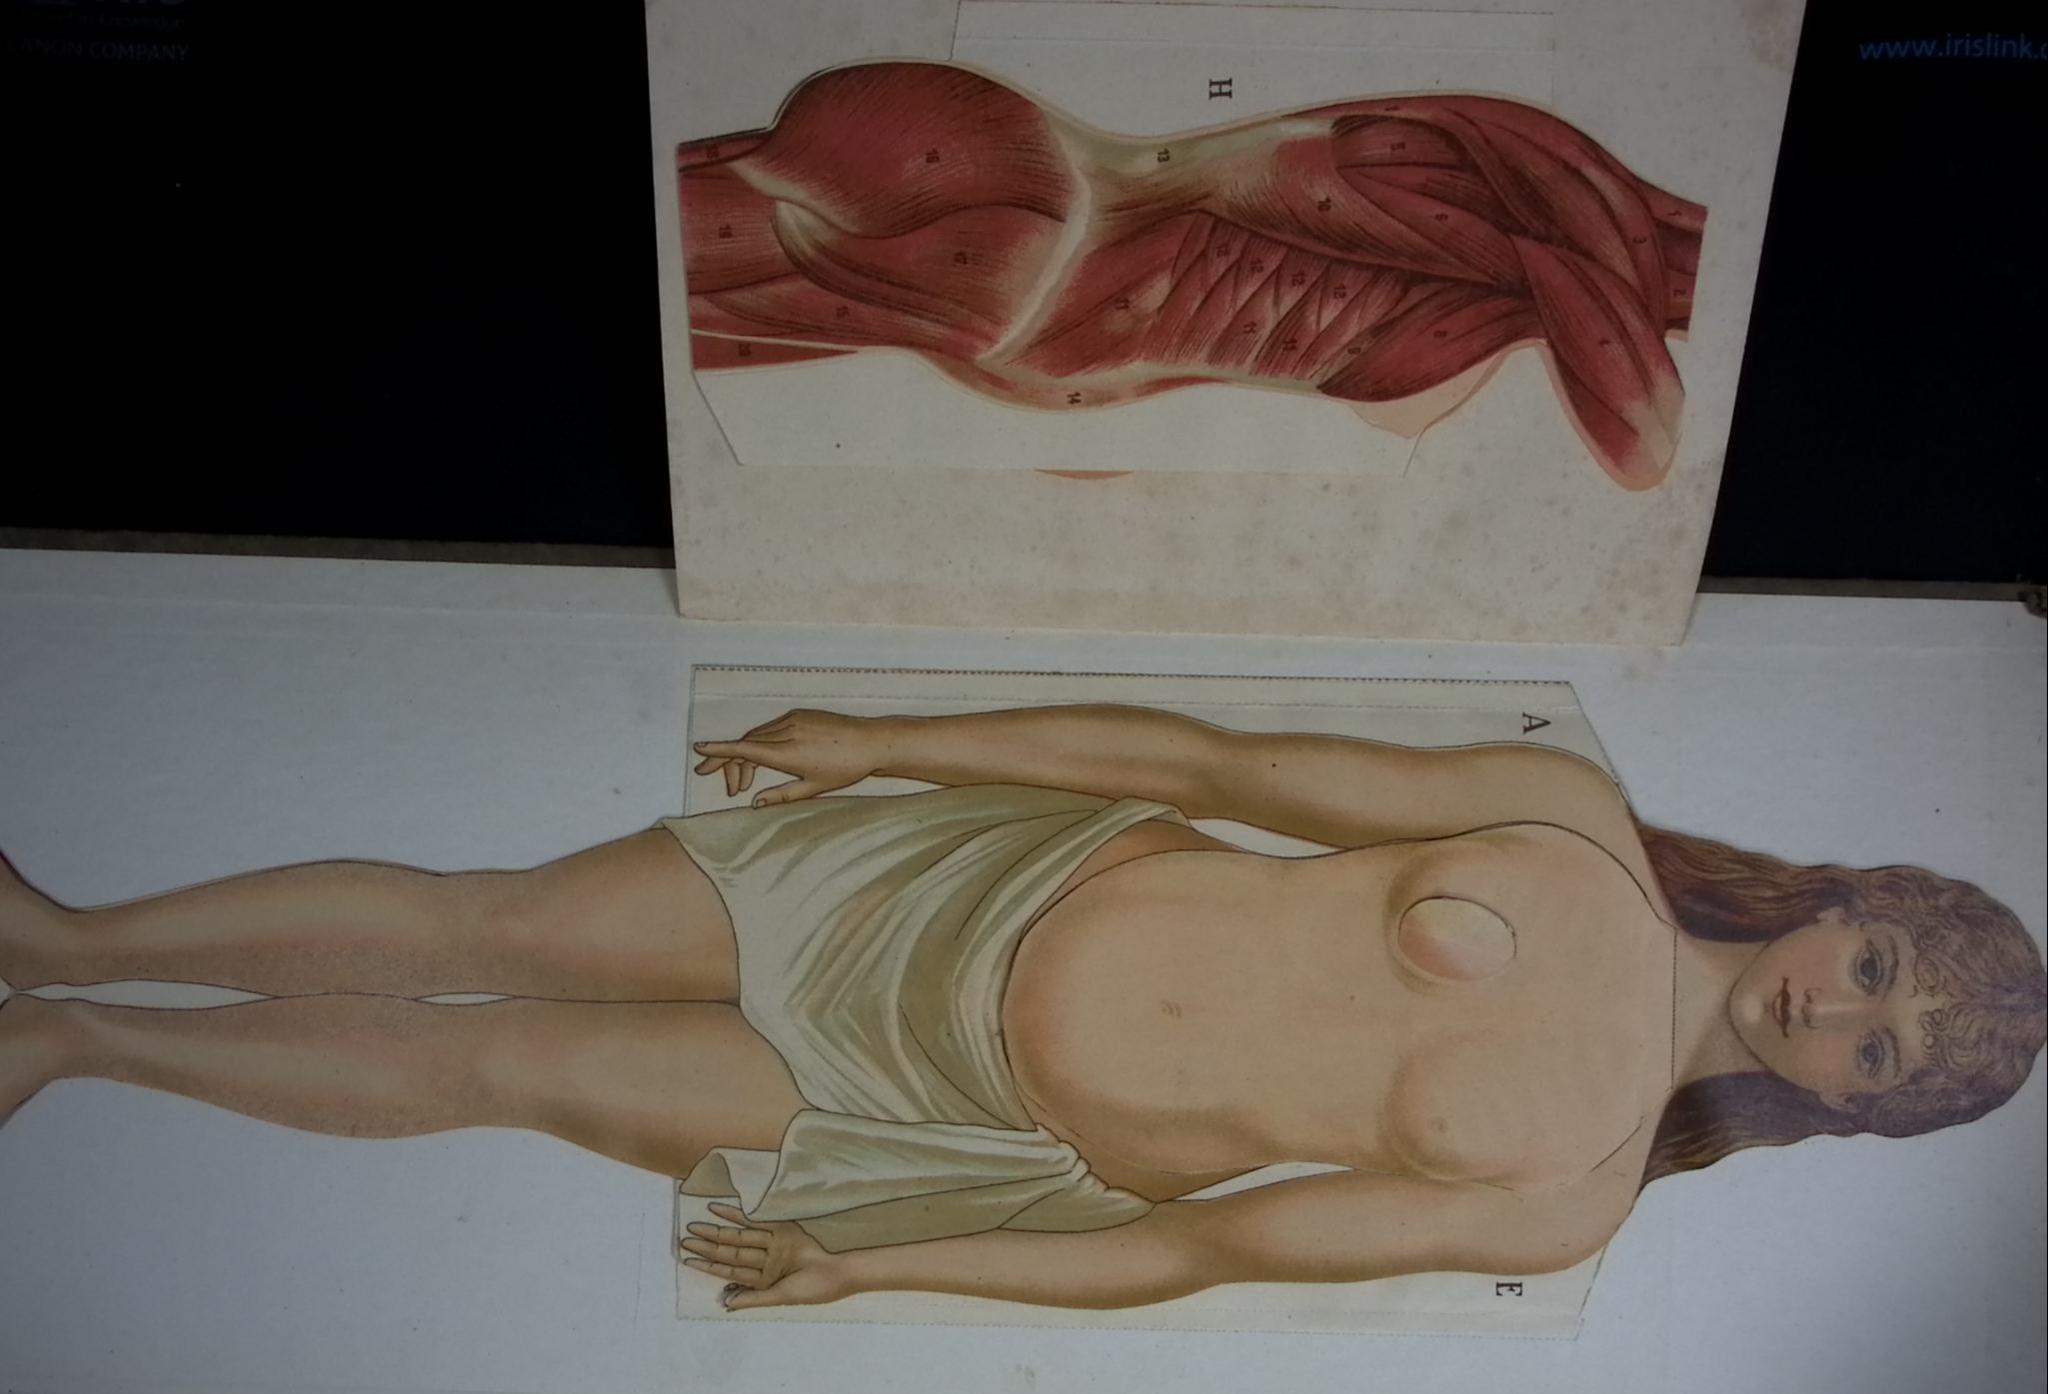 Dr Minder's Anatomical Manikin of the Female Body.